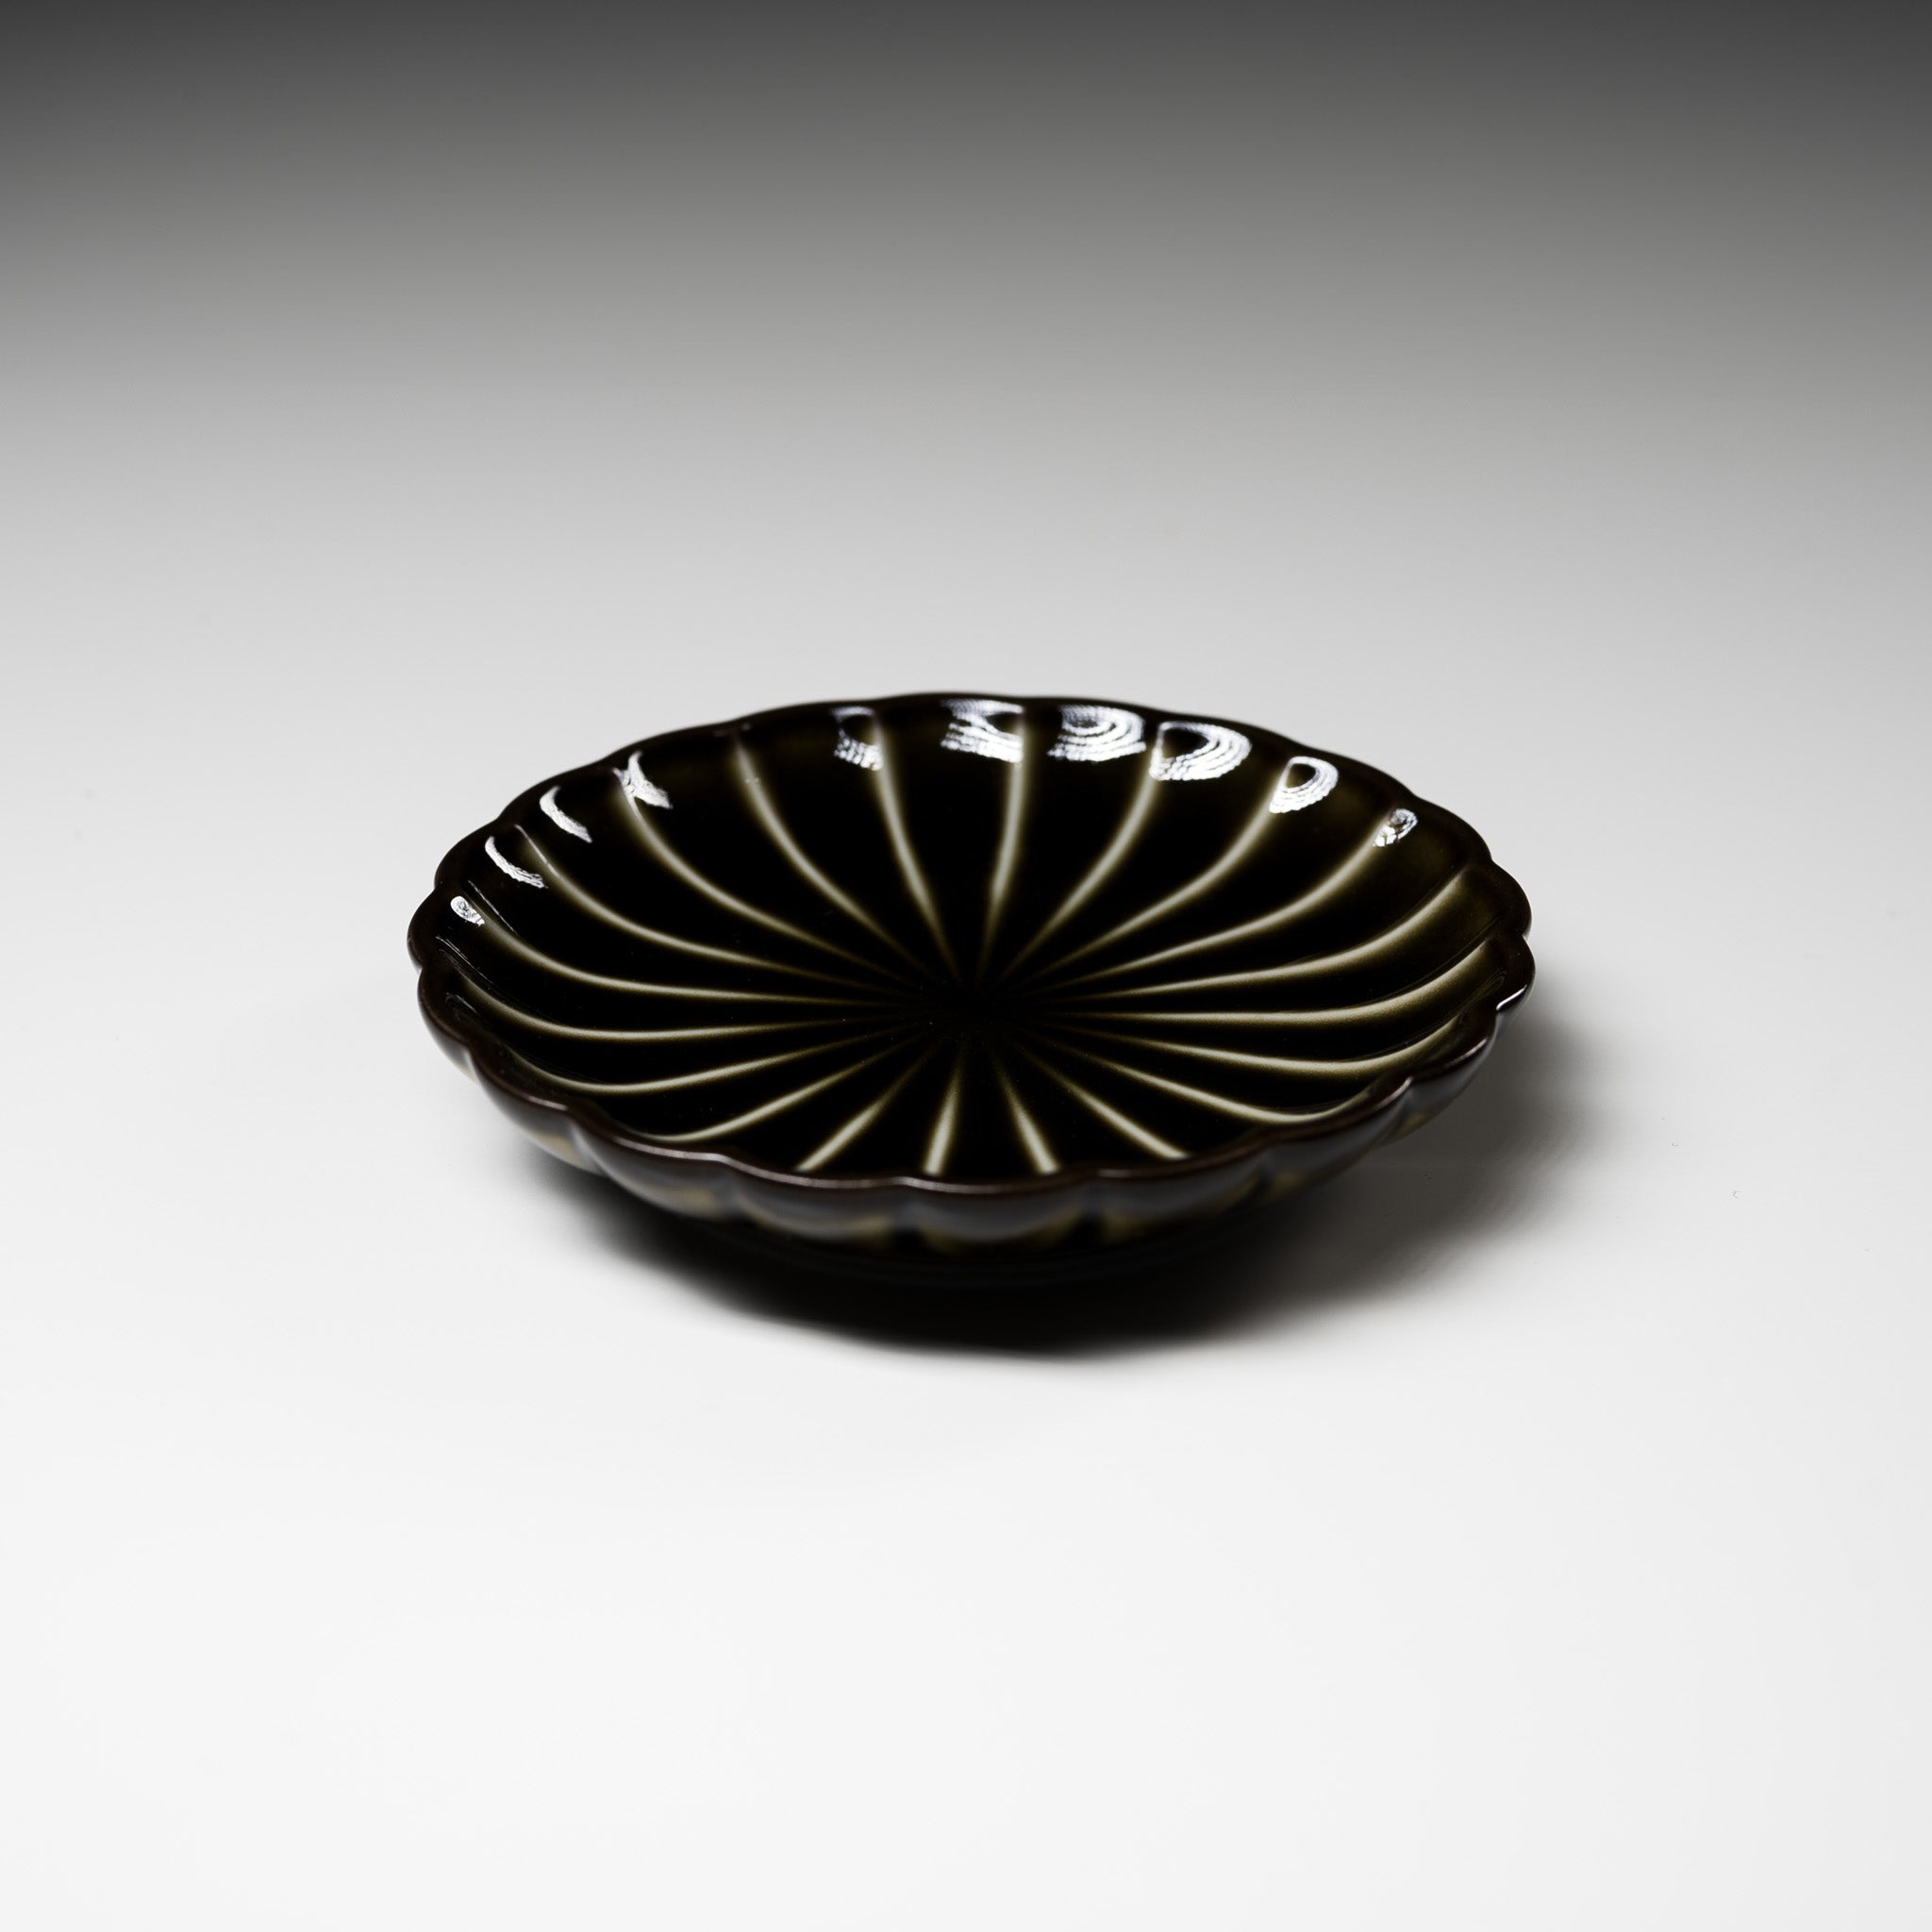 Kaneko Pottery Giyaman Series / 10 cm Plate - Olive Green